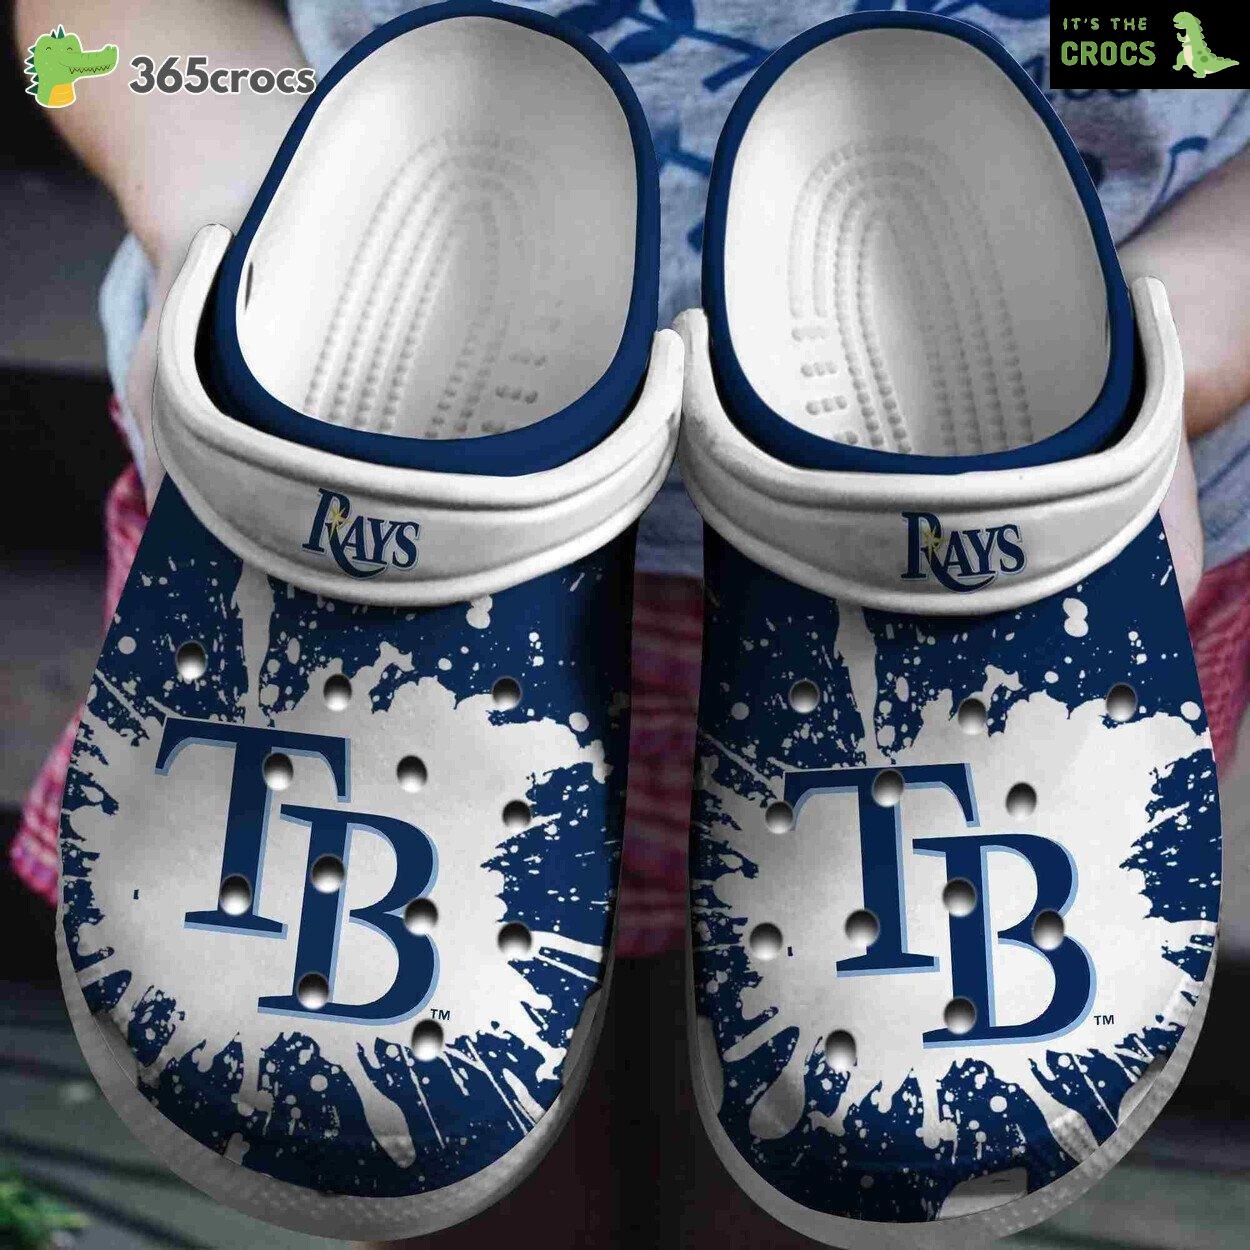 Tampa Bay Rays Baseball Team Comfortable Crocs Clogs Unique Footwear